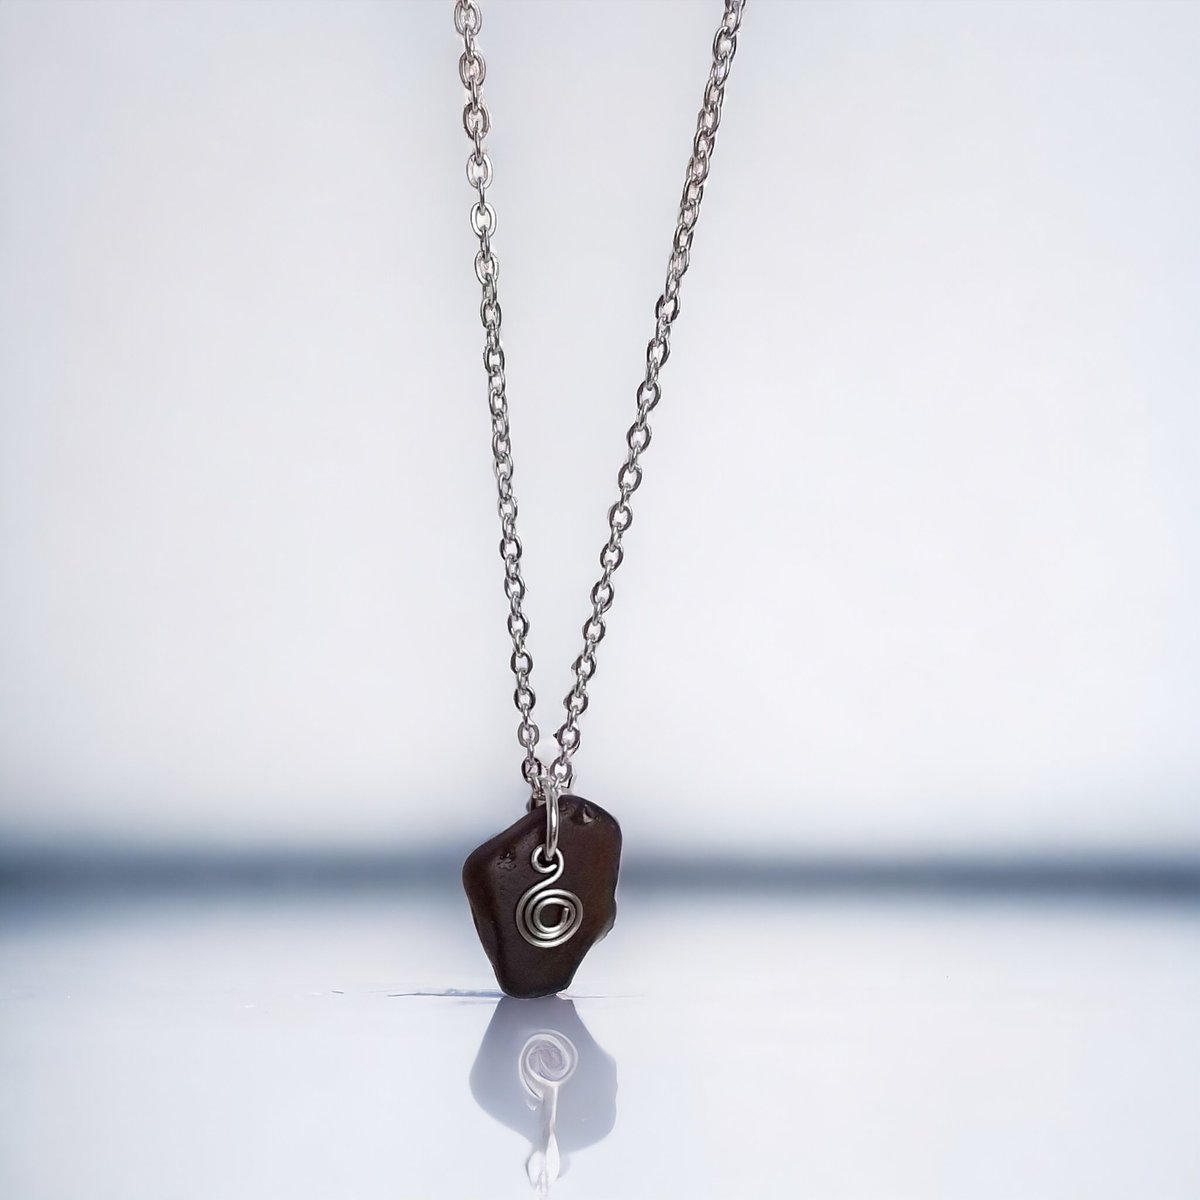 Pirate sea glass swirl pendant x💙🌊
craftmakersuk #TheCraftersUk #getthatgift #SmartSocial #HandmadeHour #UKGiftAM #handmadeinbritain #BizBubble #networkwiththrive #UKGiftHour #bizhour #Craftsuk #craftbizparty #etsyfinds #womaninbizhour #inbizhour #elevenseshour #necklace